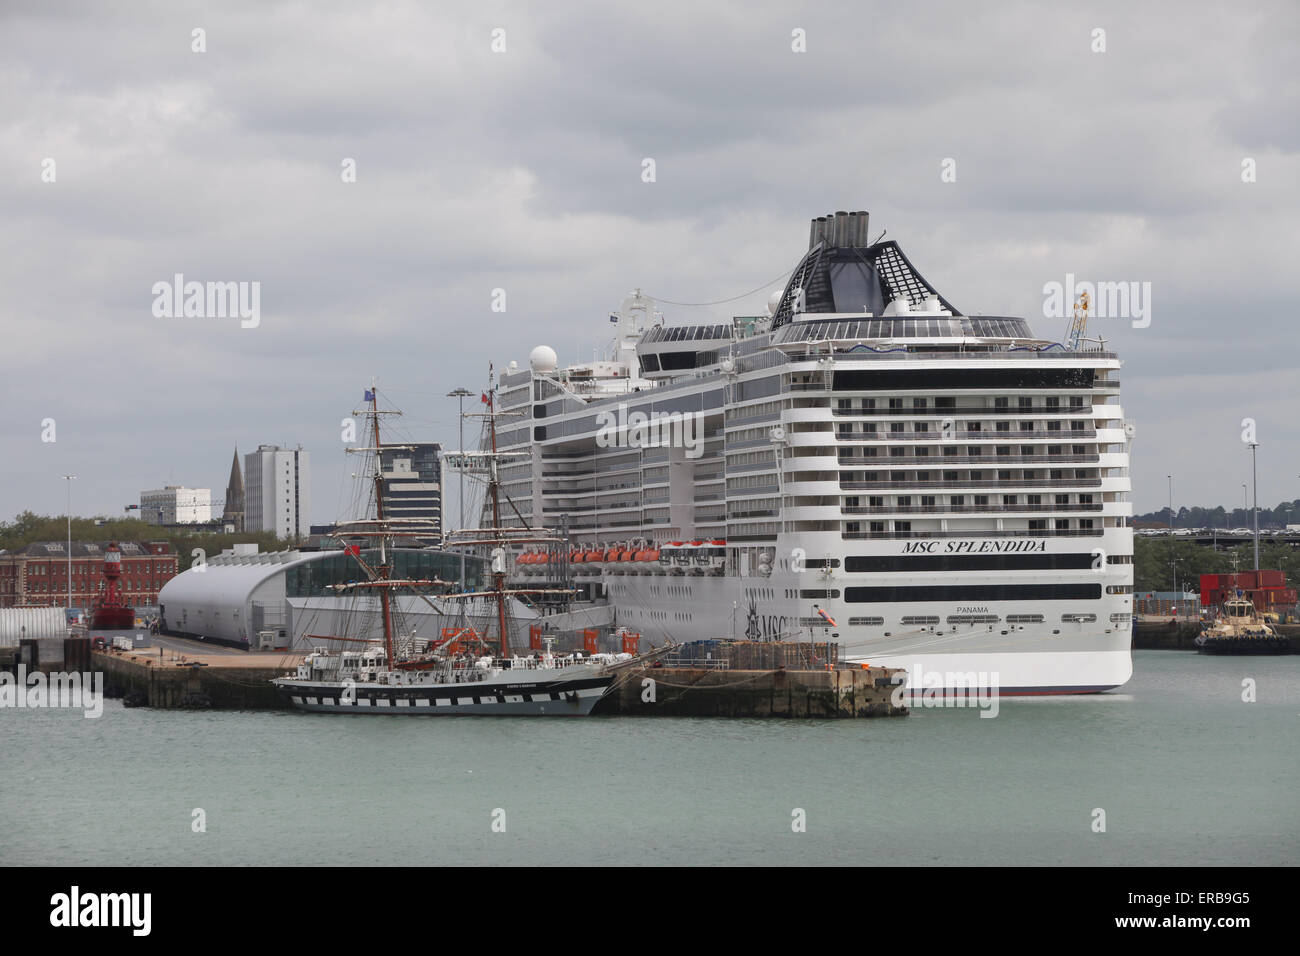 MSC Splendida cruise ship pictured at Southampton Docks Ocean terminal Stock Photo